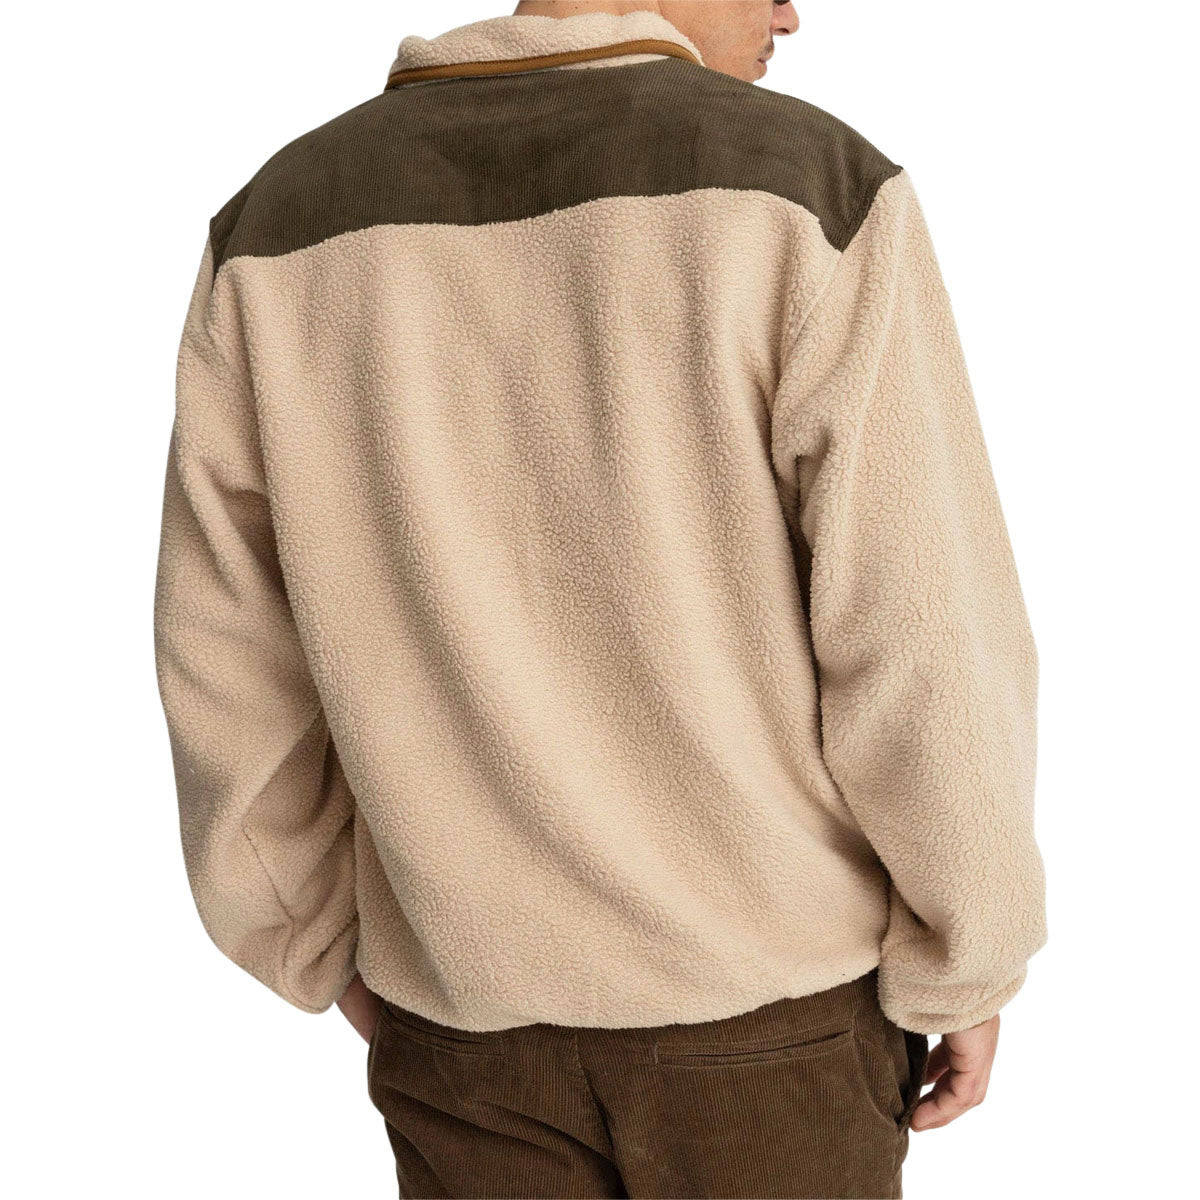 Rhythm Tamas Half Zip Pull Over Sweatshirt - Bark image 2